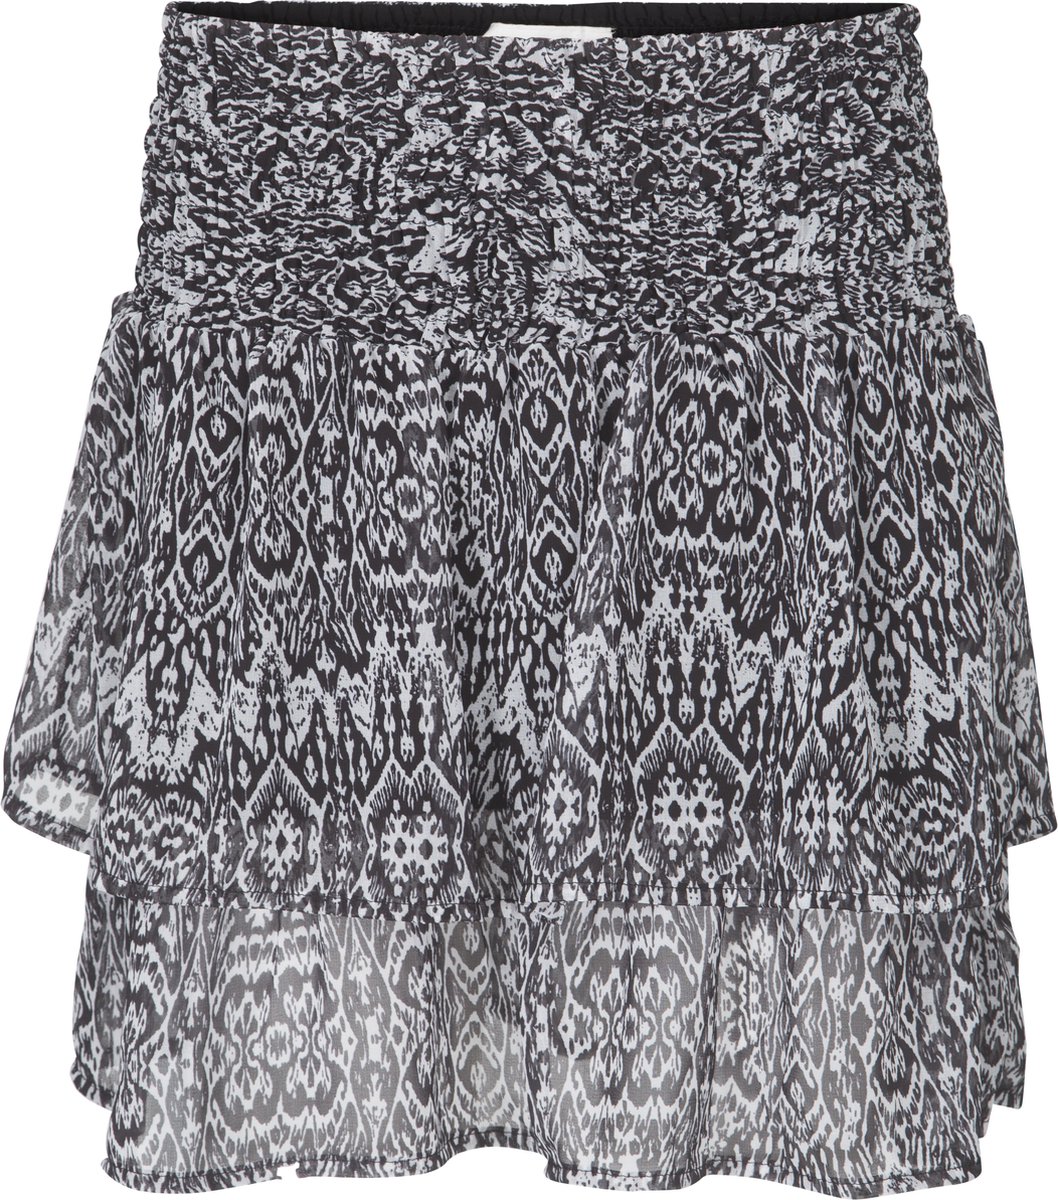 Les Icônes - Elegance Skirt - Rok - Zwart - Dessin - 34/36